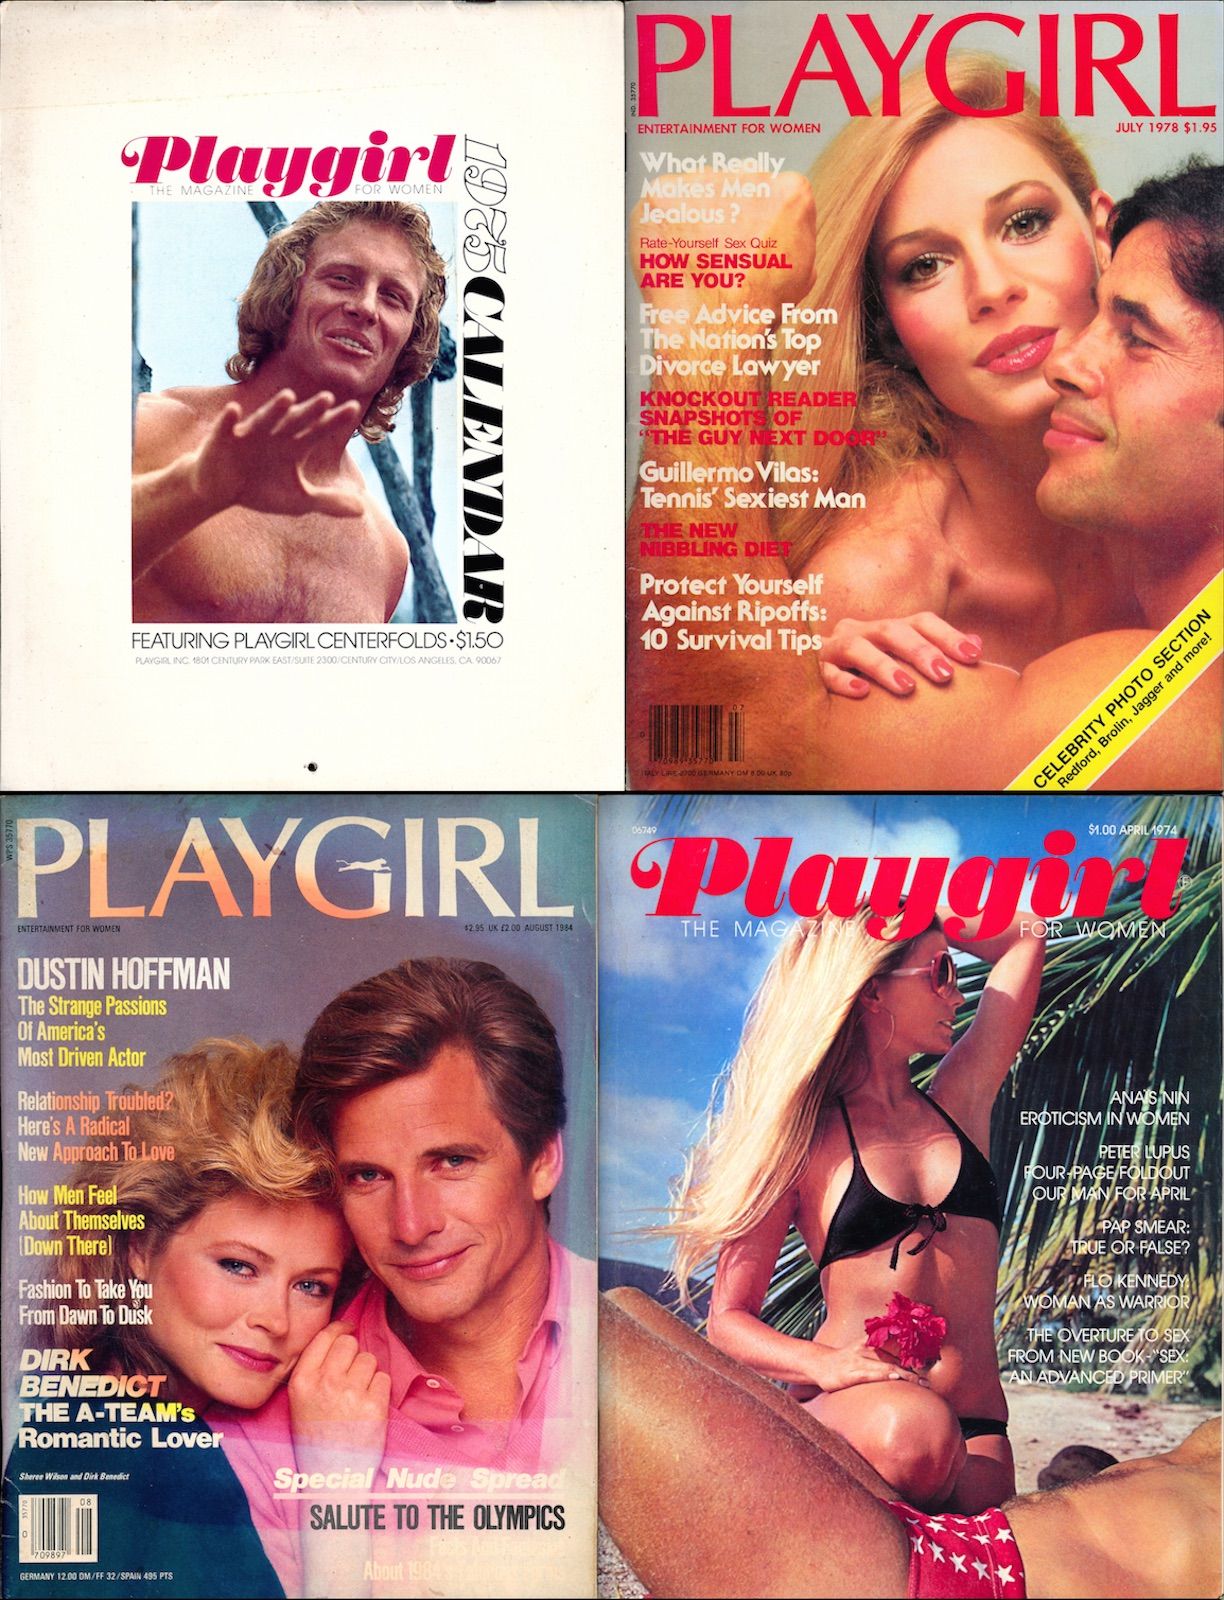 Playgirl (4 Vintage adult magazines, 1974-84) by Lambert, Douglas